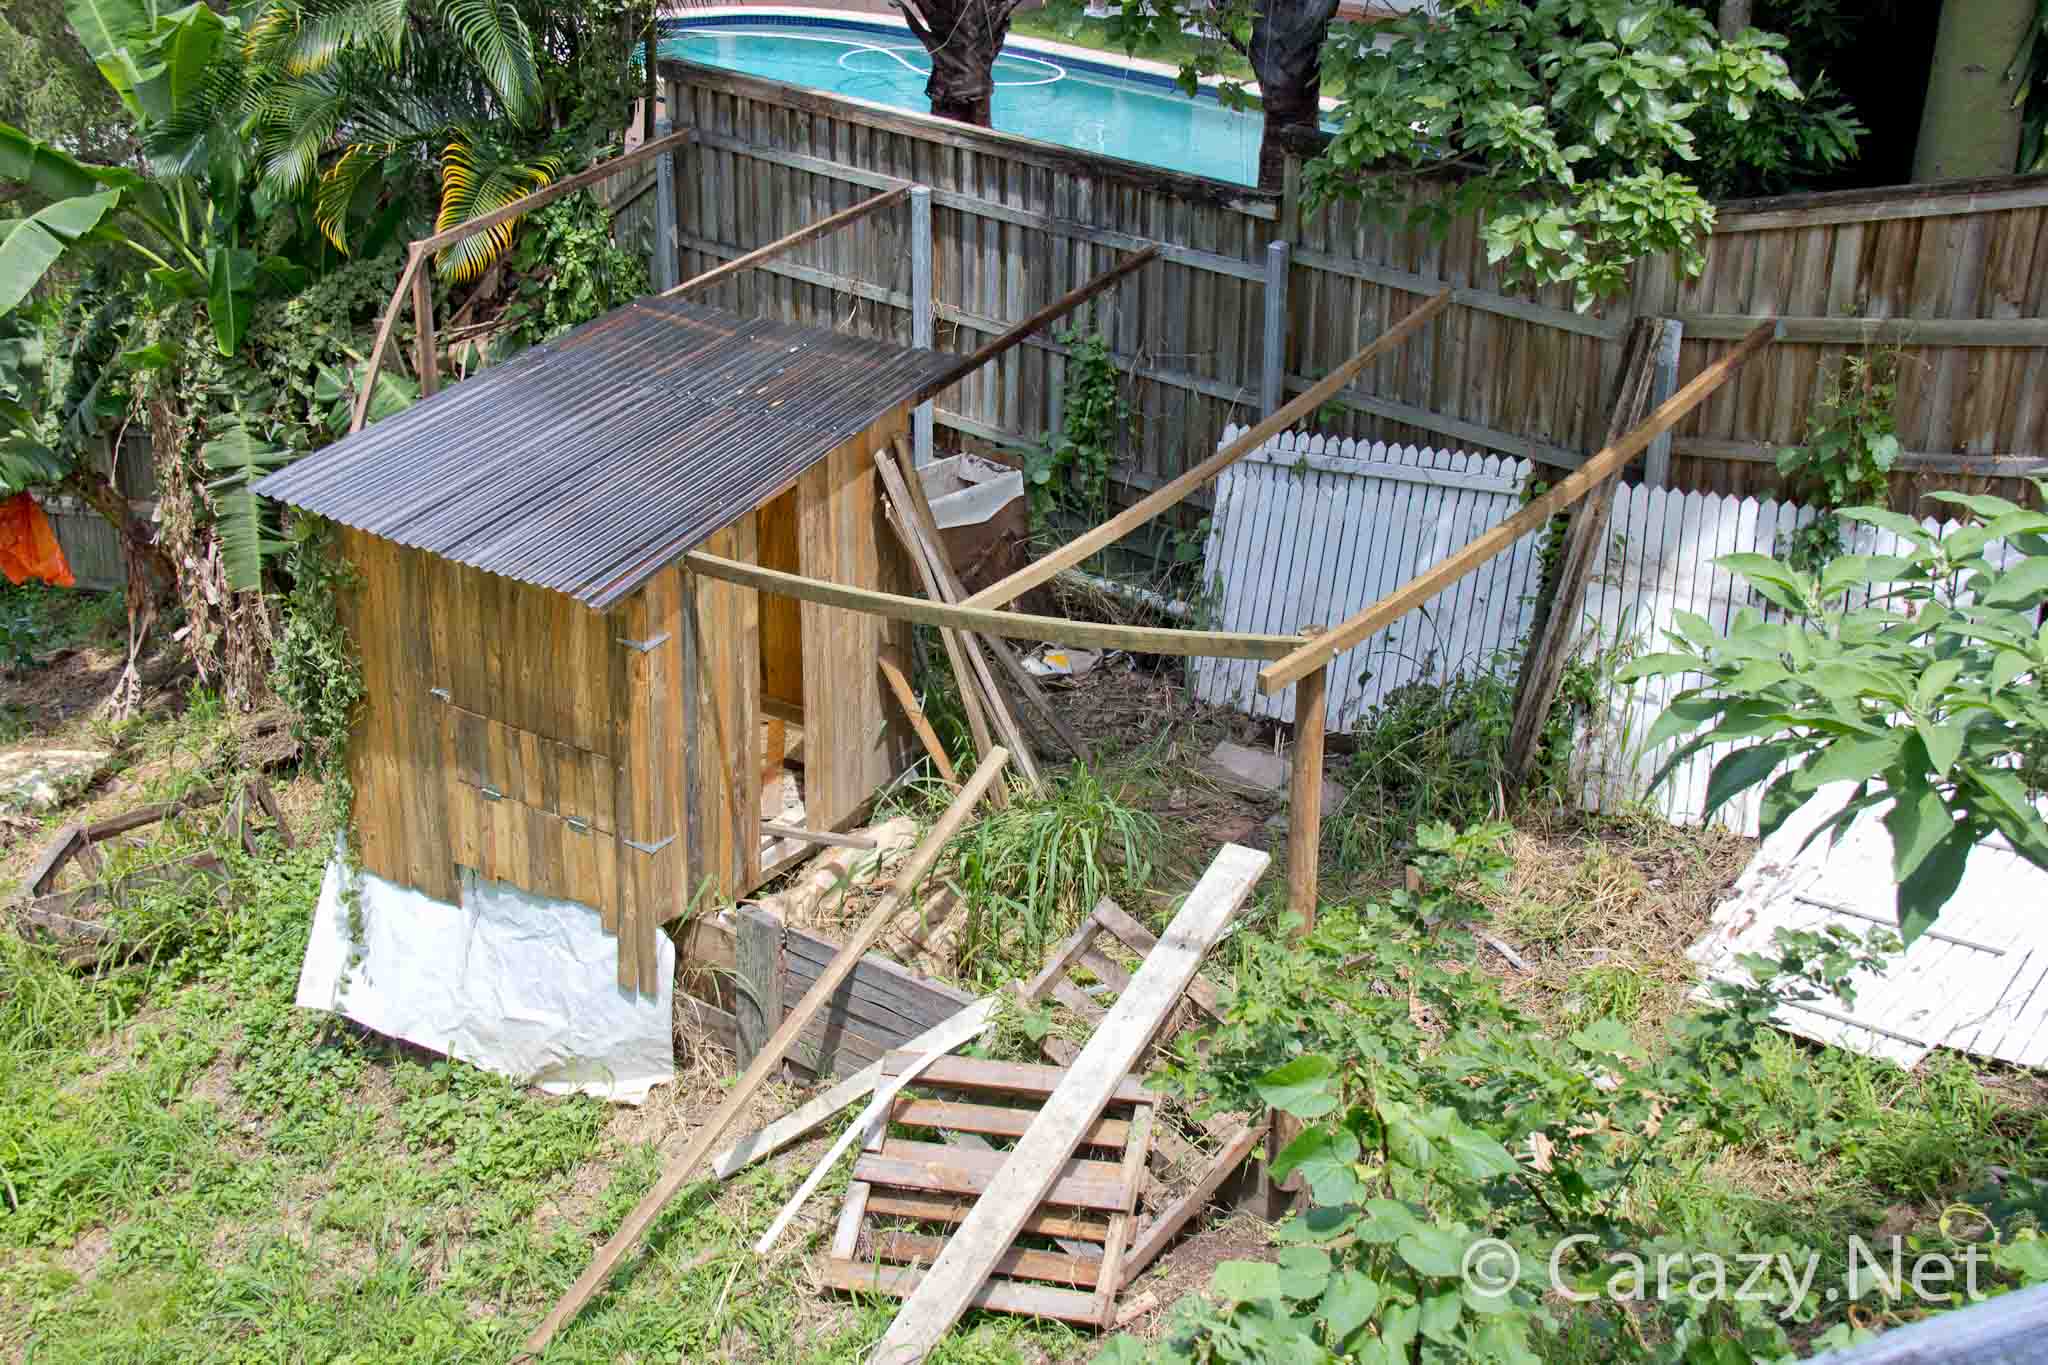 DIY Chicken Coop Build - Roof and chicken run frame